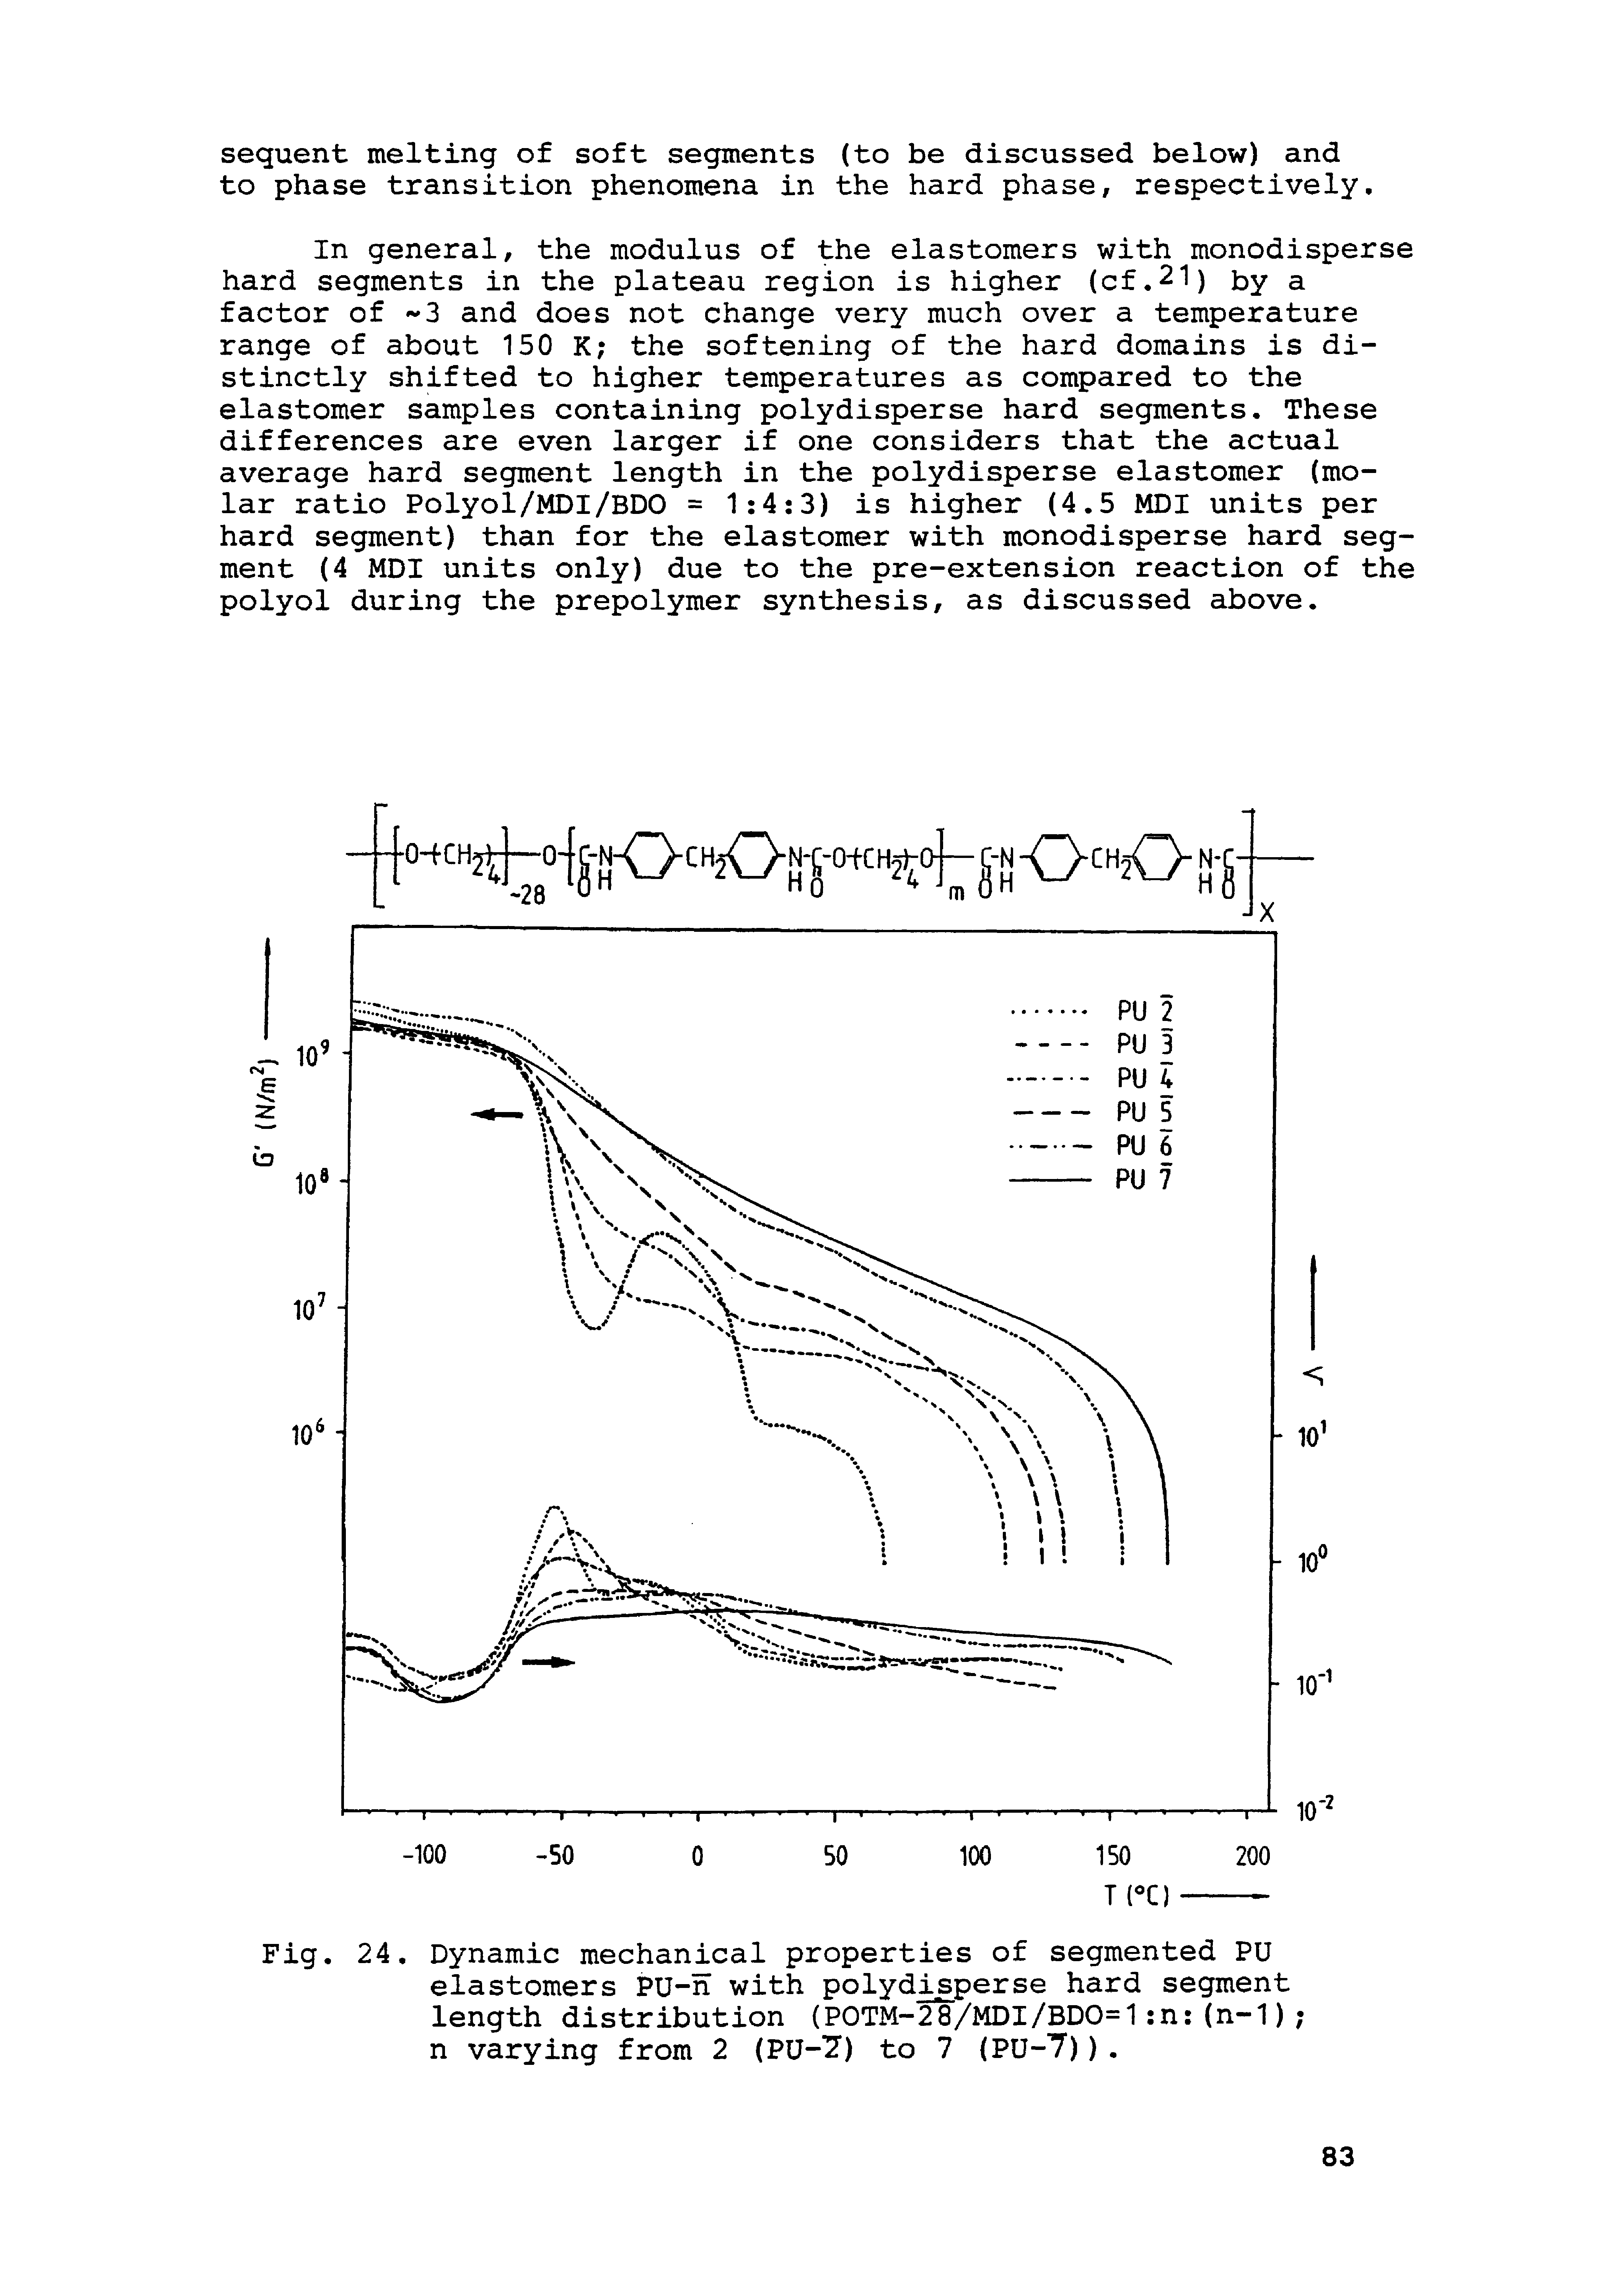 Fig. 24, Dynamic mechanical properties of segmented PU elastomers PU-h with polydisperse hard segment length distribution (POTM-28/MDI/BDO=1 n (n-1) n varying from 2 (PU- ) to 7 (PU-7)).